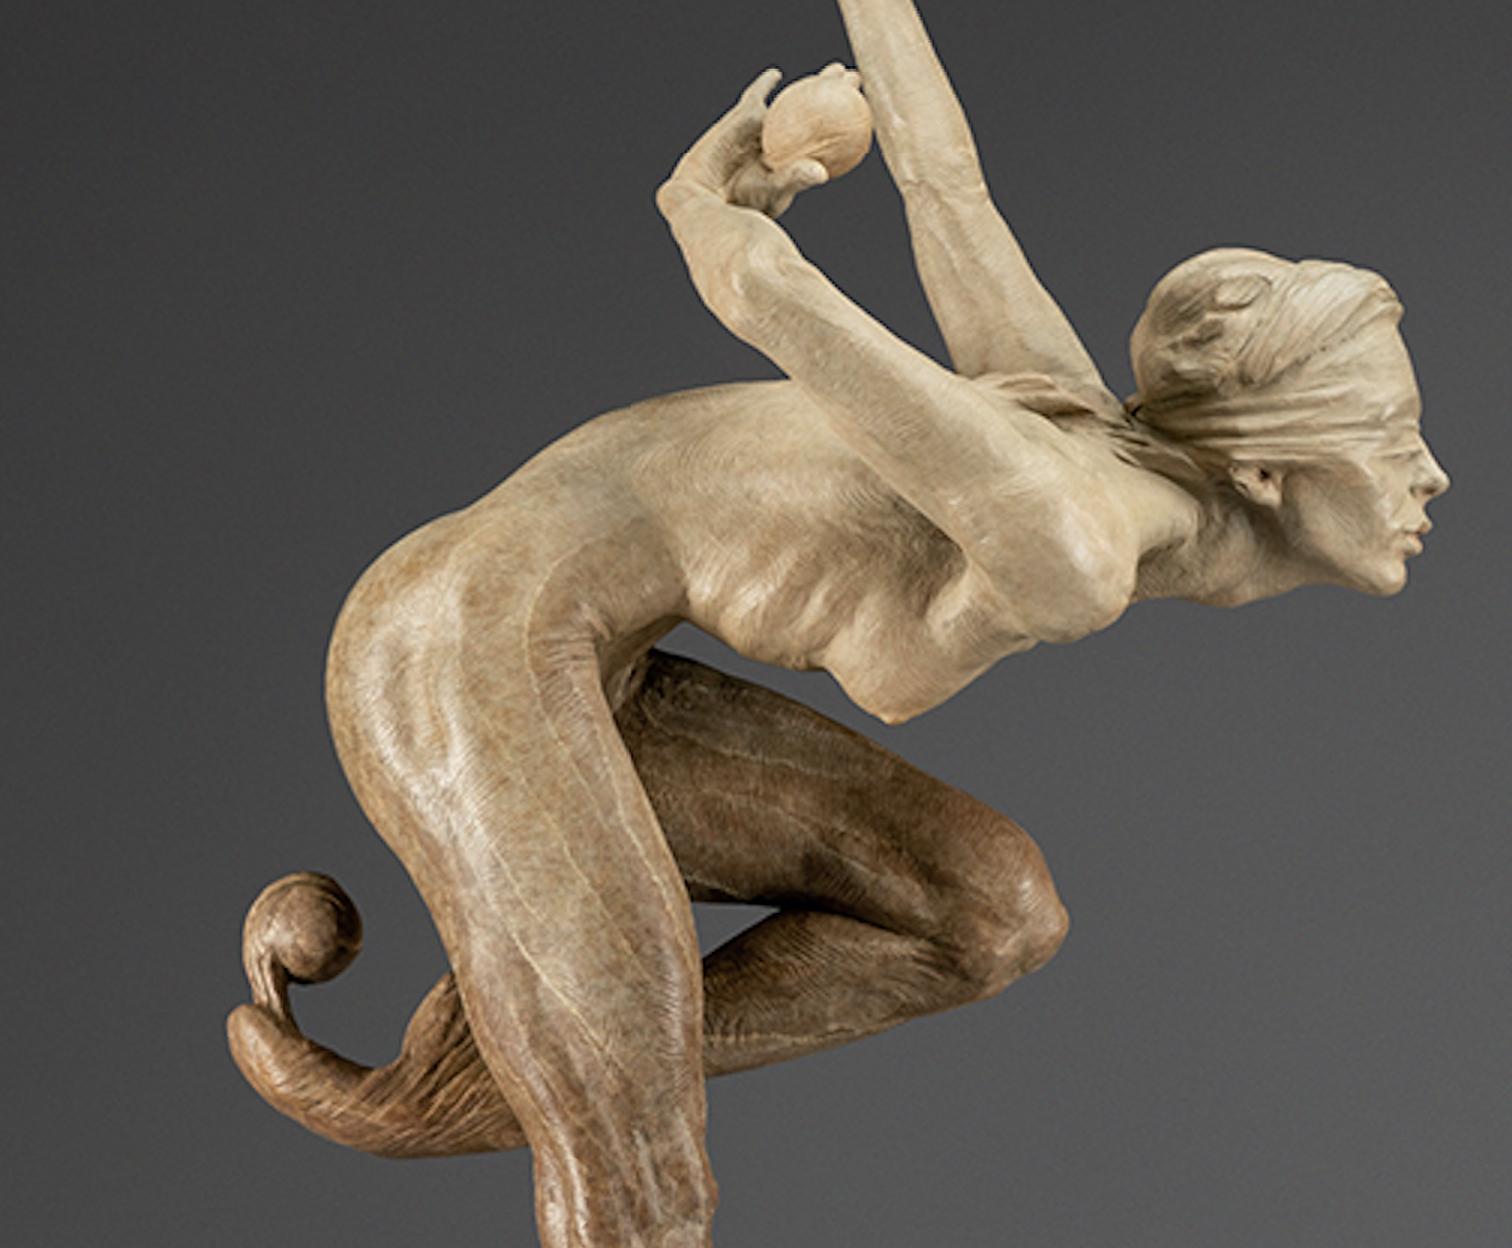 Blind Trust, Atelier - Gold Figurative Sculpture by Richard MacDonald